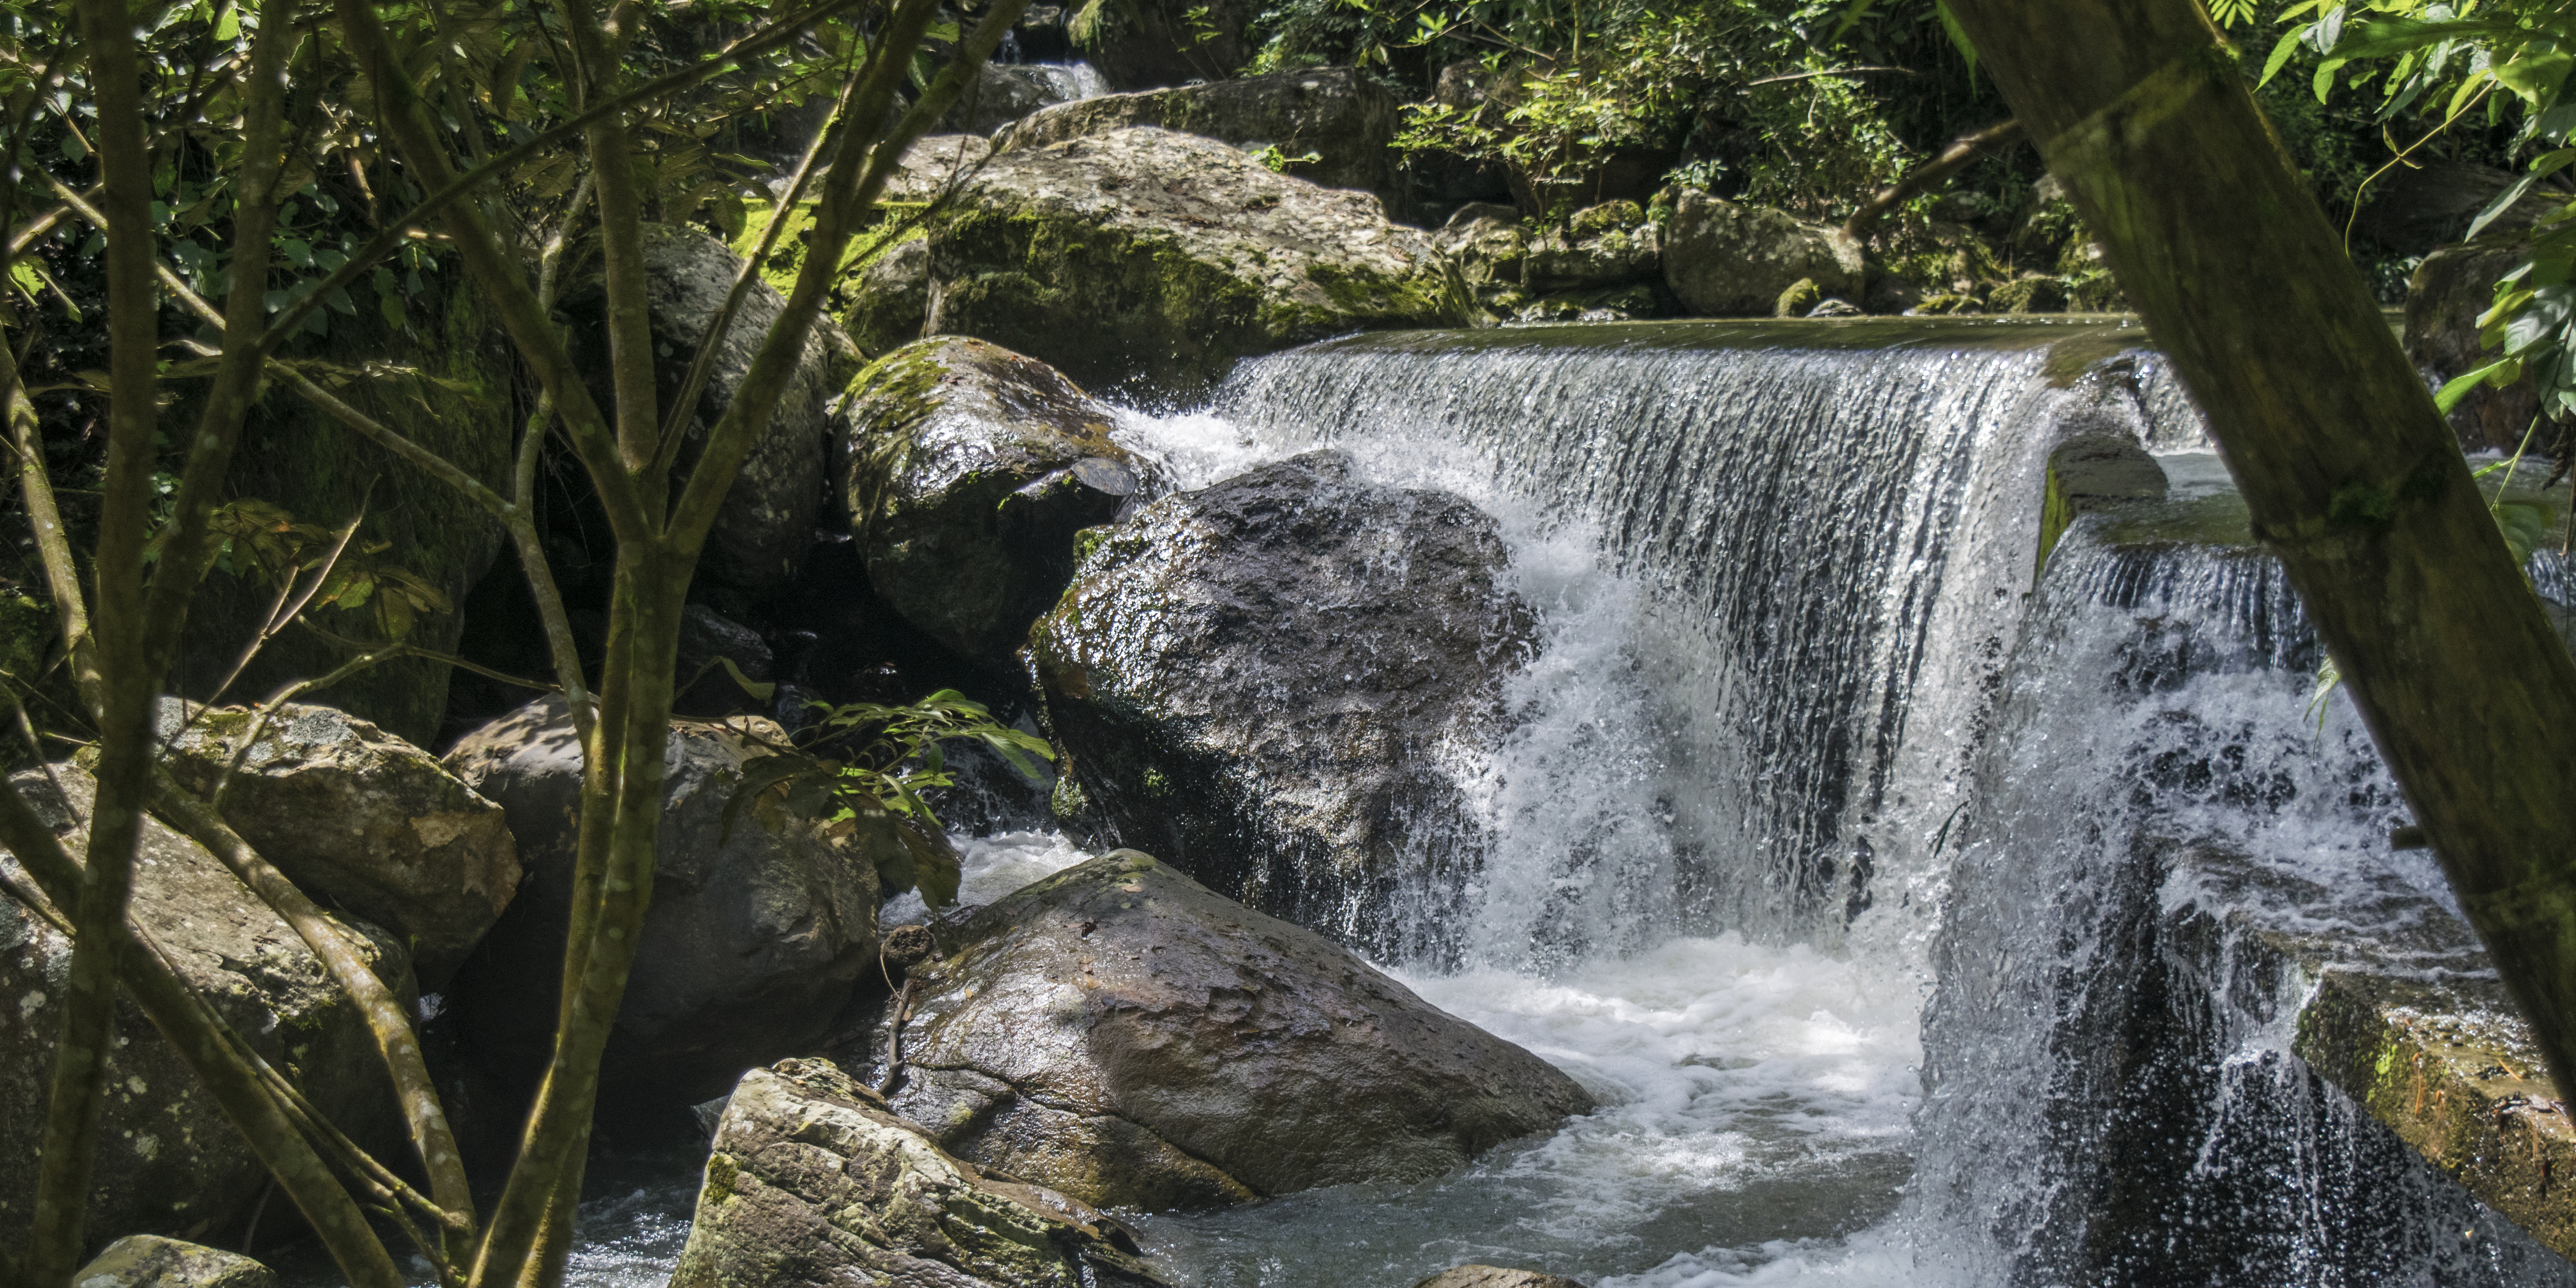 Comunidades campesinas protegen fuentes hídricas de Cundinamarca

